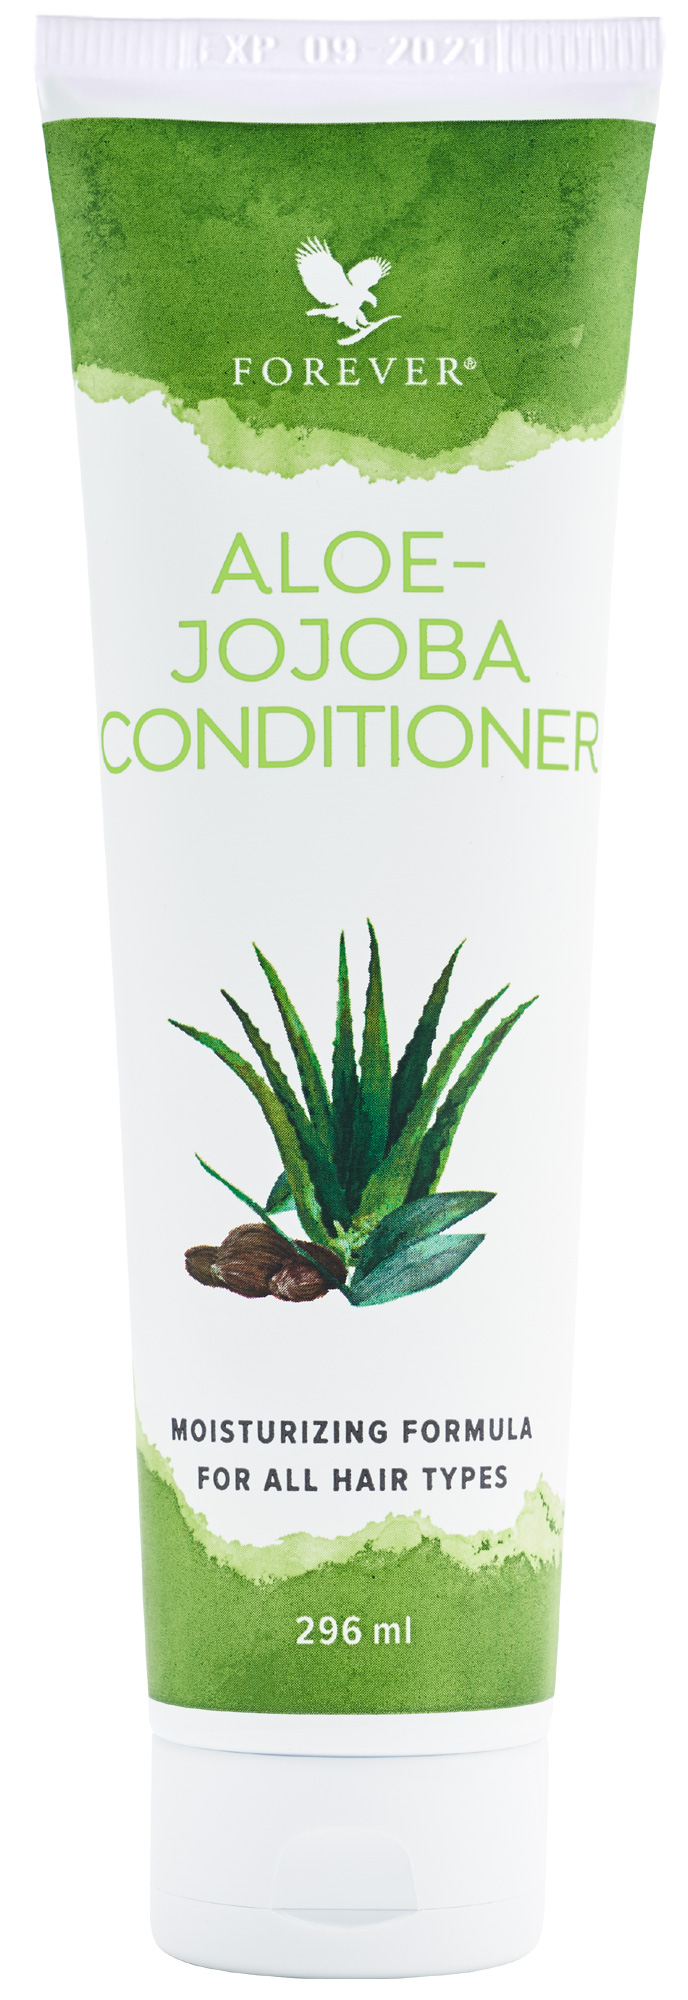 FOREVER Aloe-Jojoba Conditioner